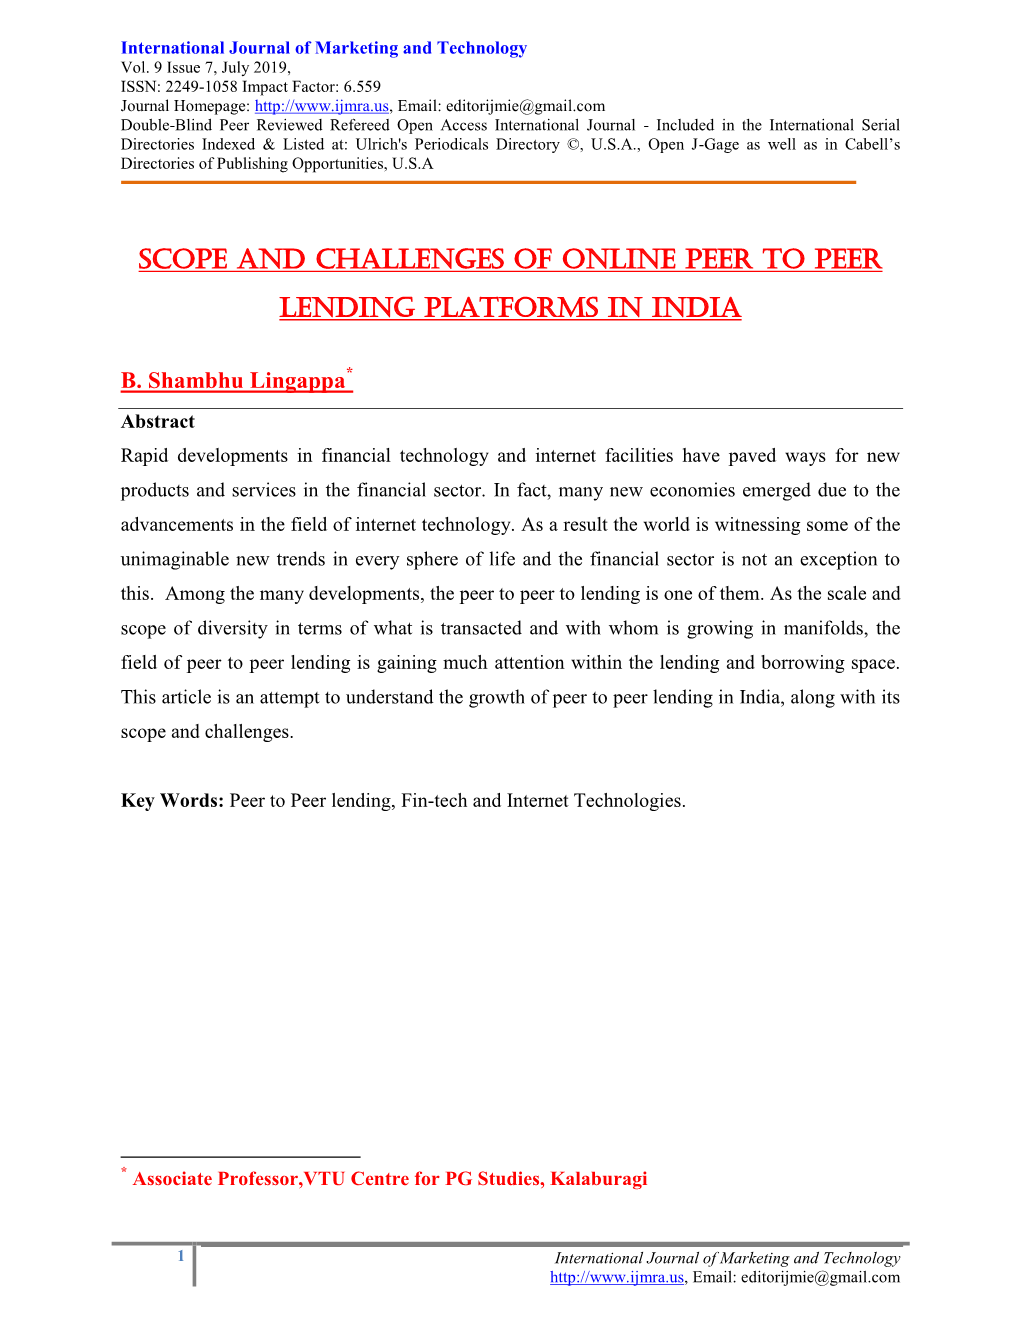 Scope and Challenges of Online Peer to Peer Lending Platforms in India